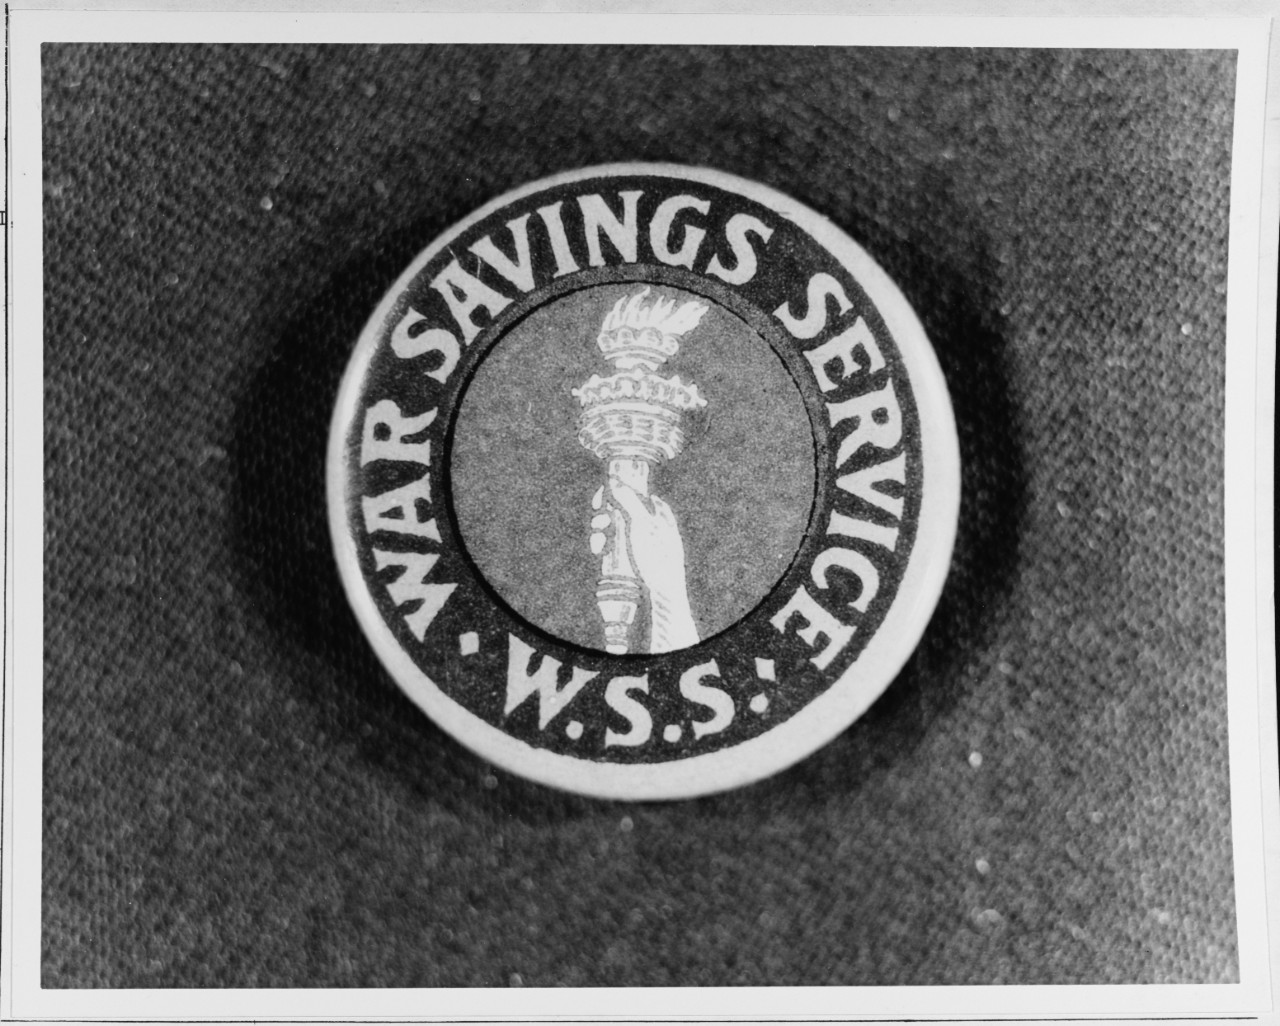 War Savings Service (W.S.S.) pin